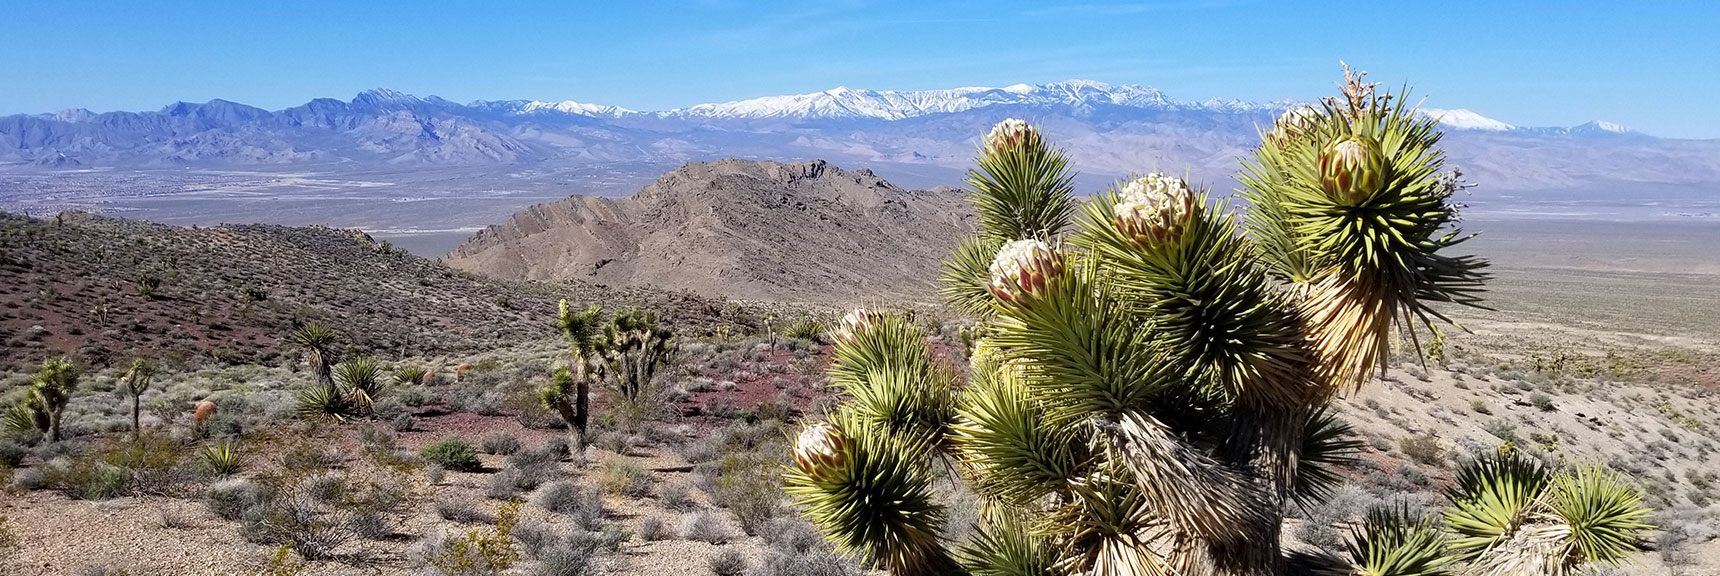 Joshua Tree West of Gass Peak, Nevada